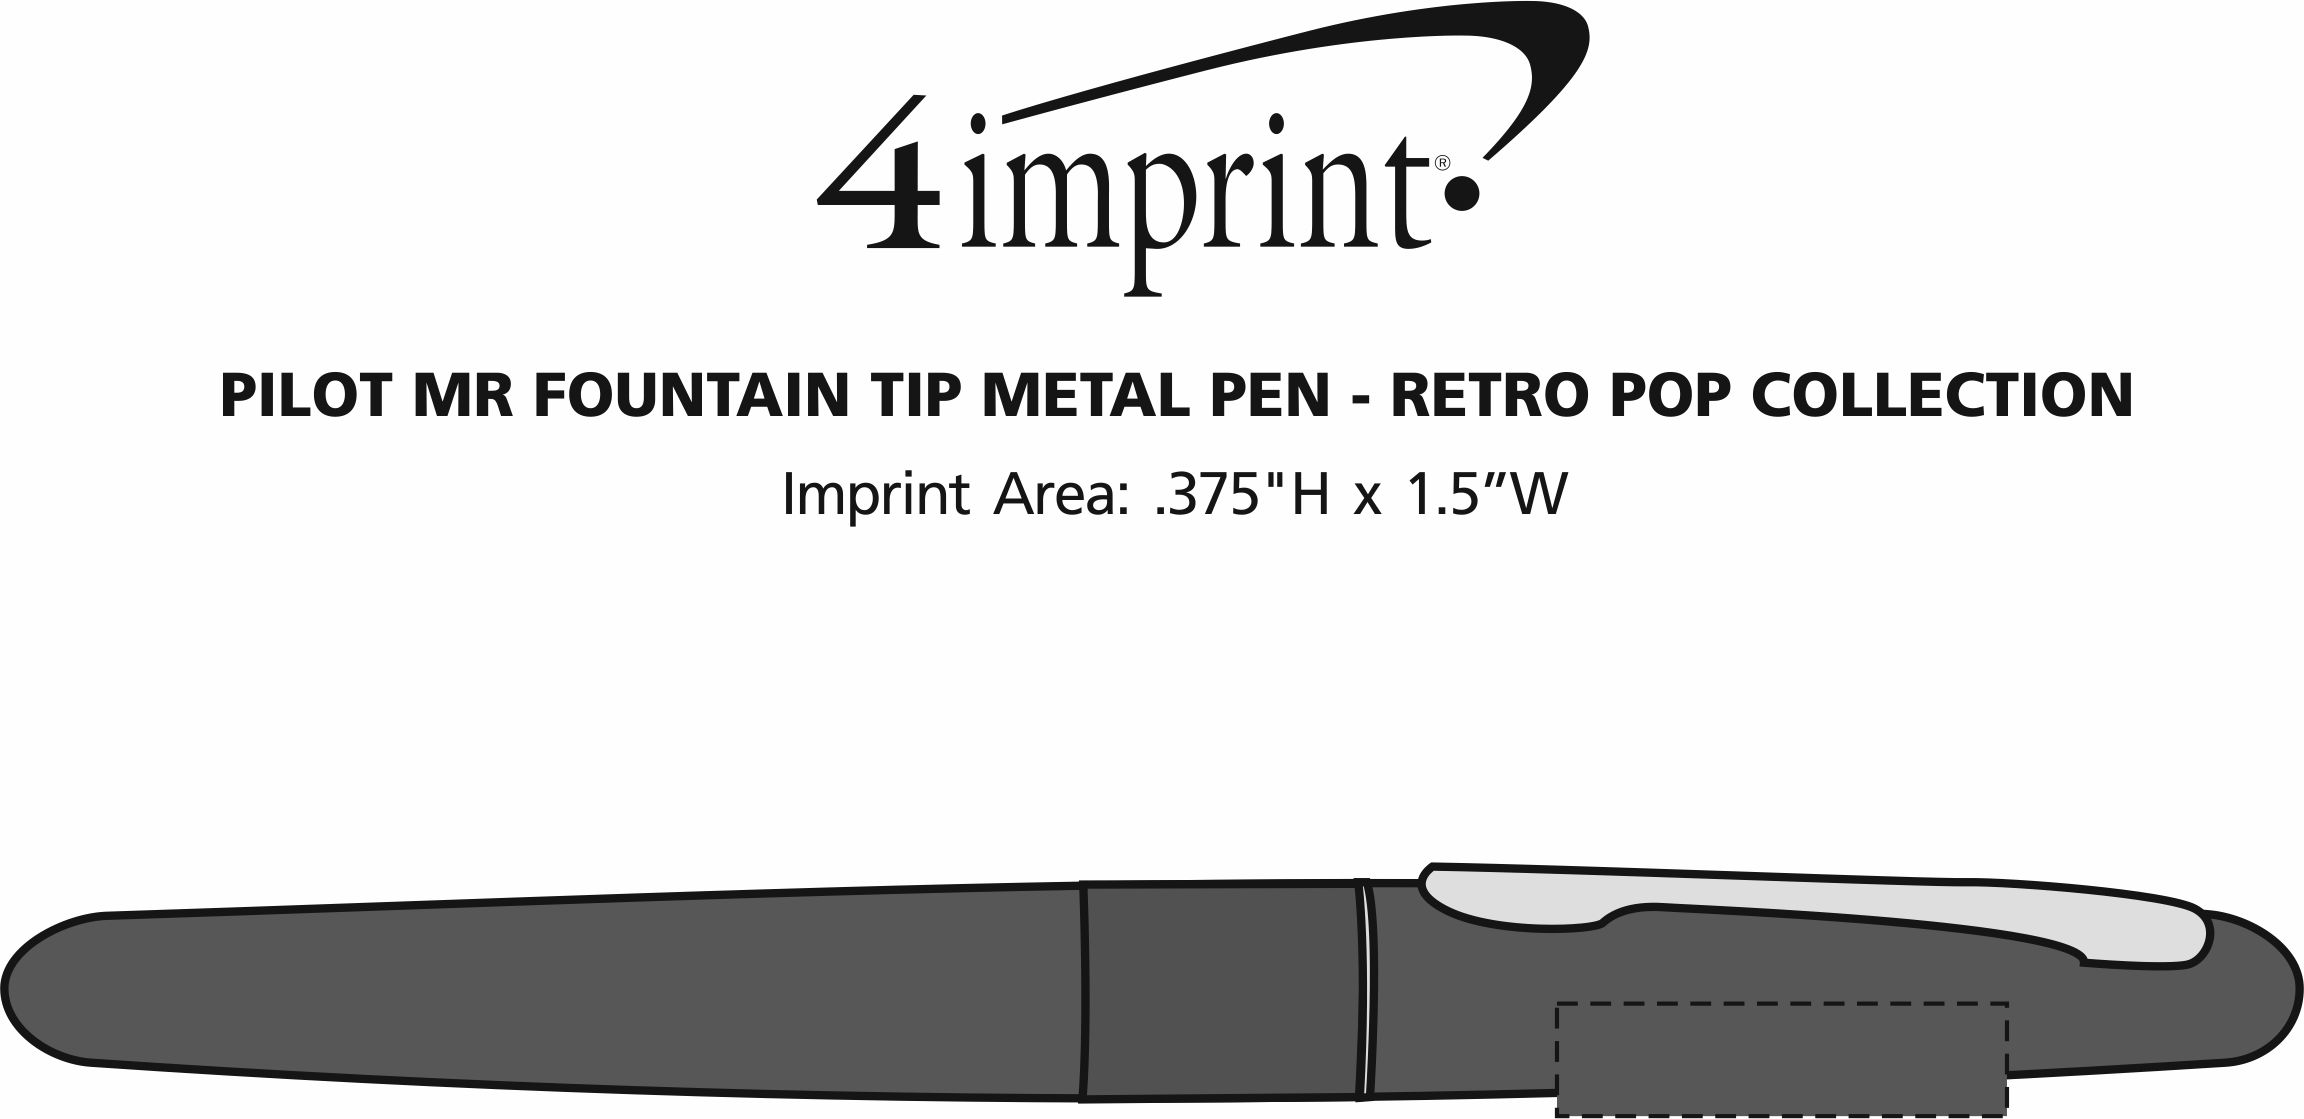 Imprint Area of Pilot MR Fountain Tip Metal Pen - Retro Pop Collection